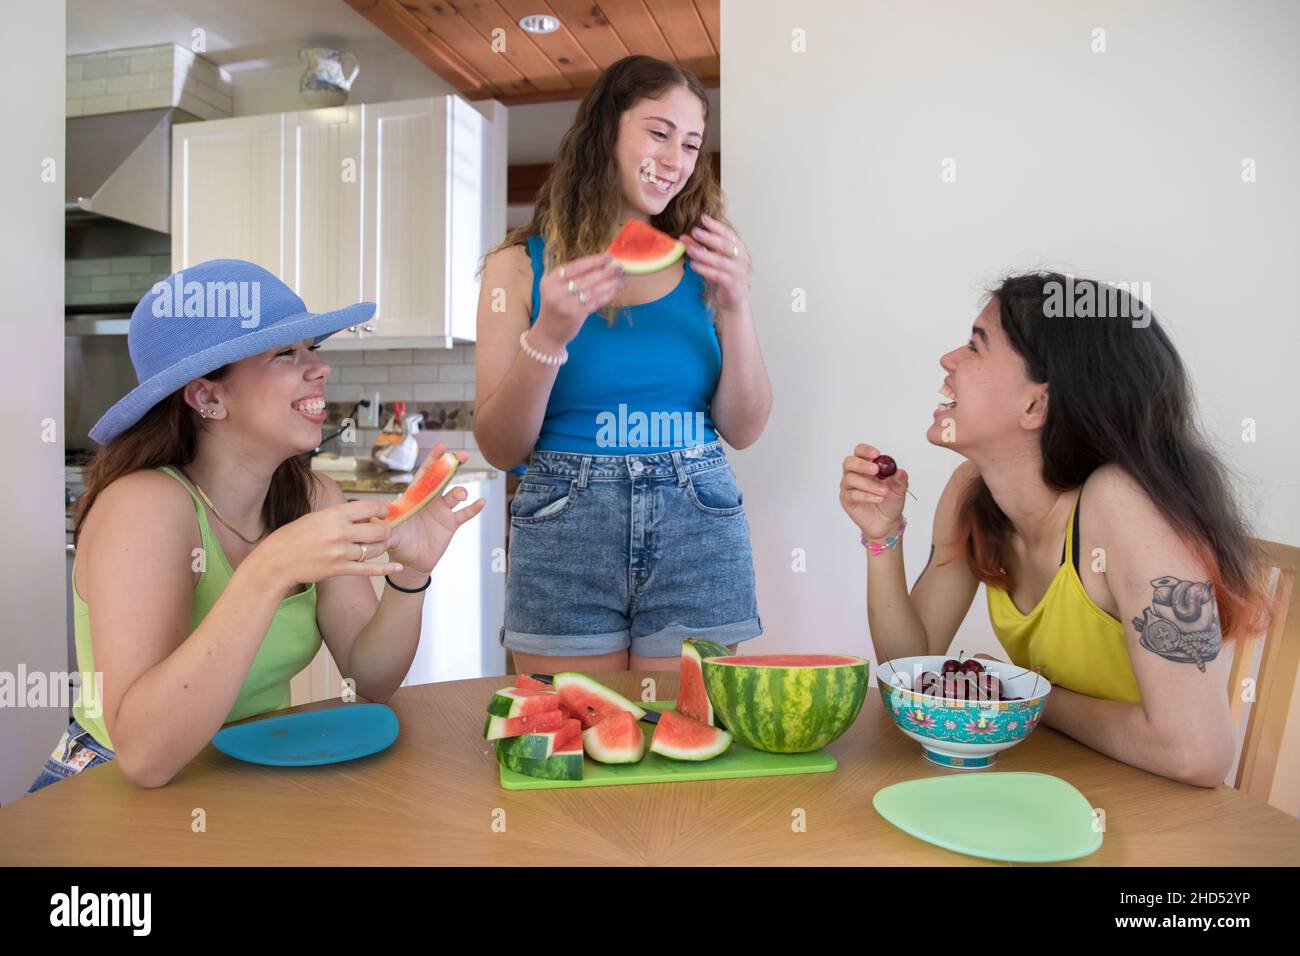 Three Female College Friends eat watermelon and cherries Stock Photo